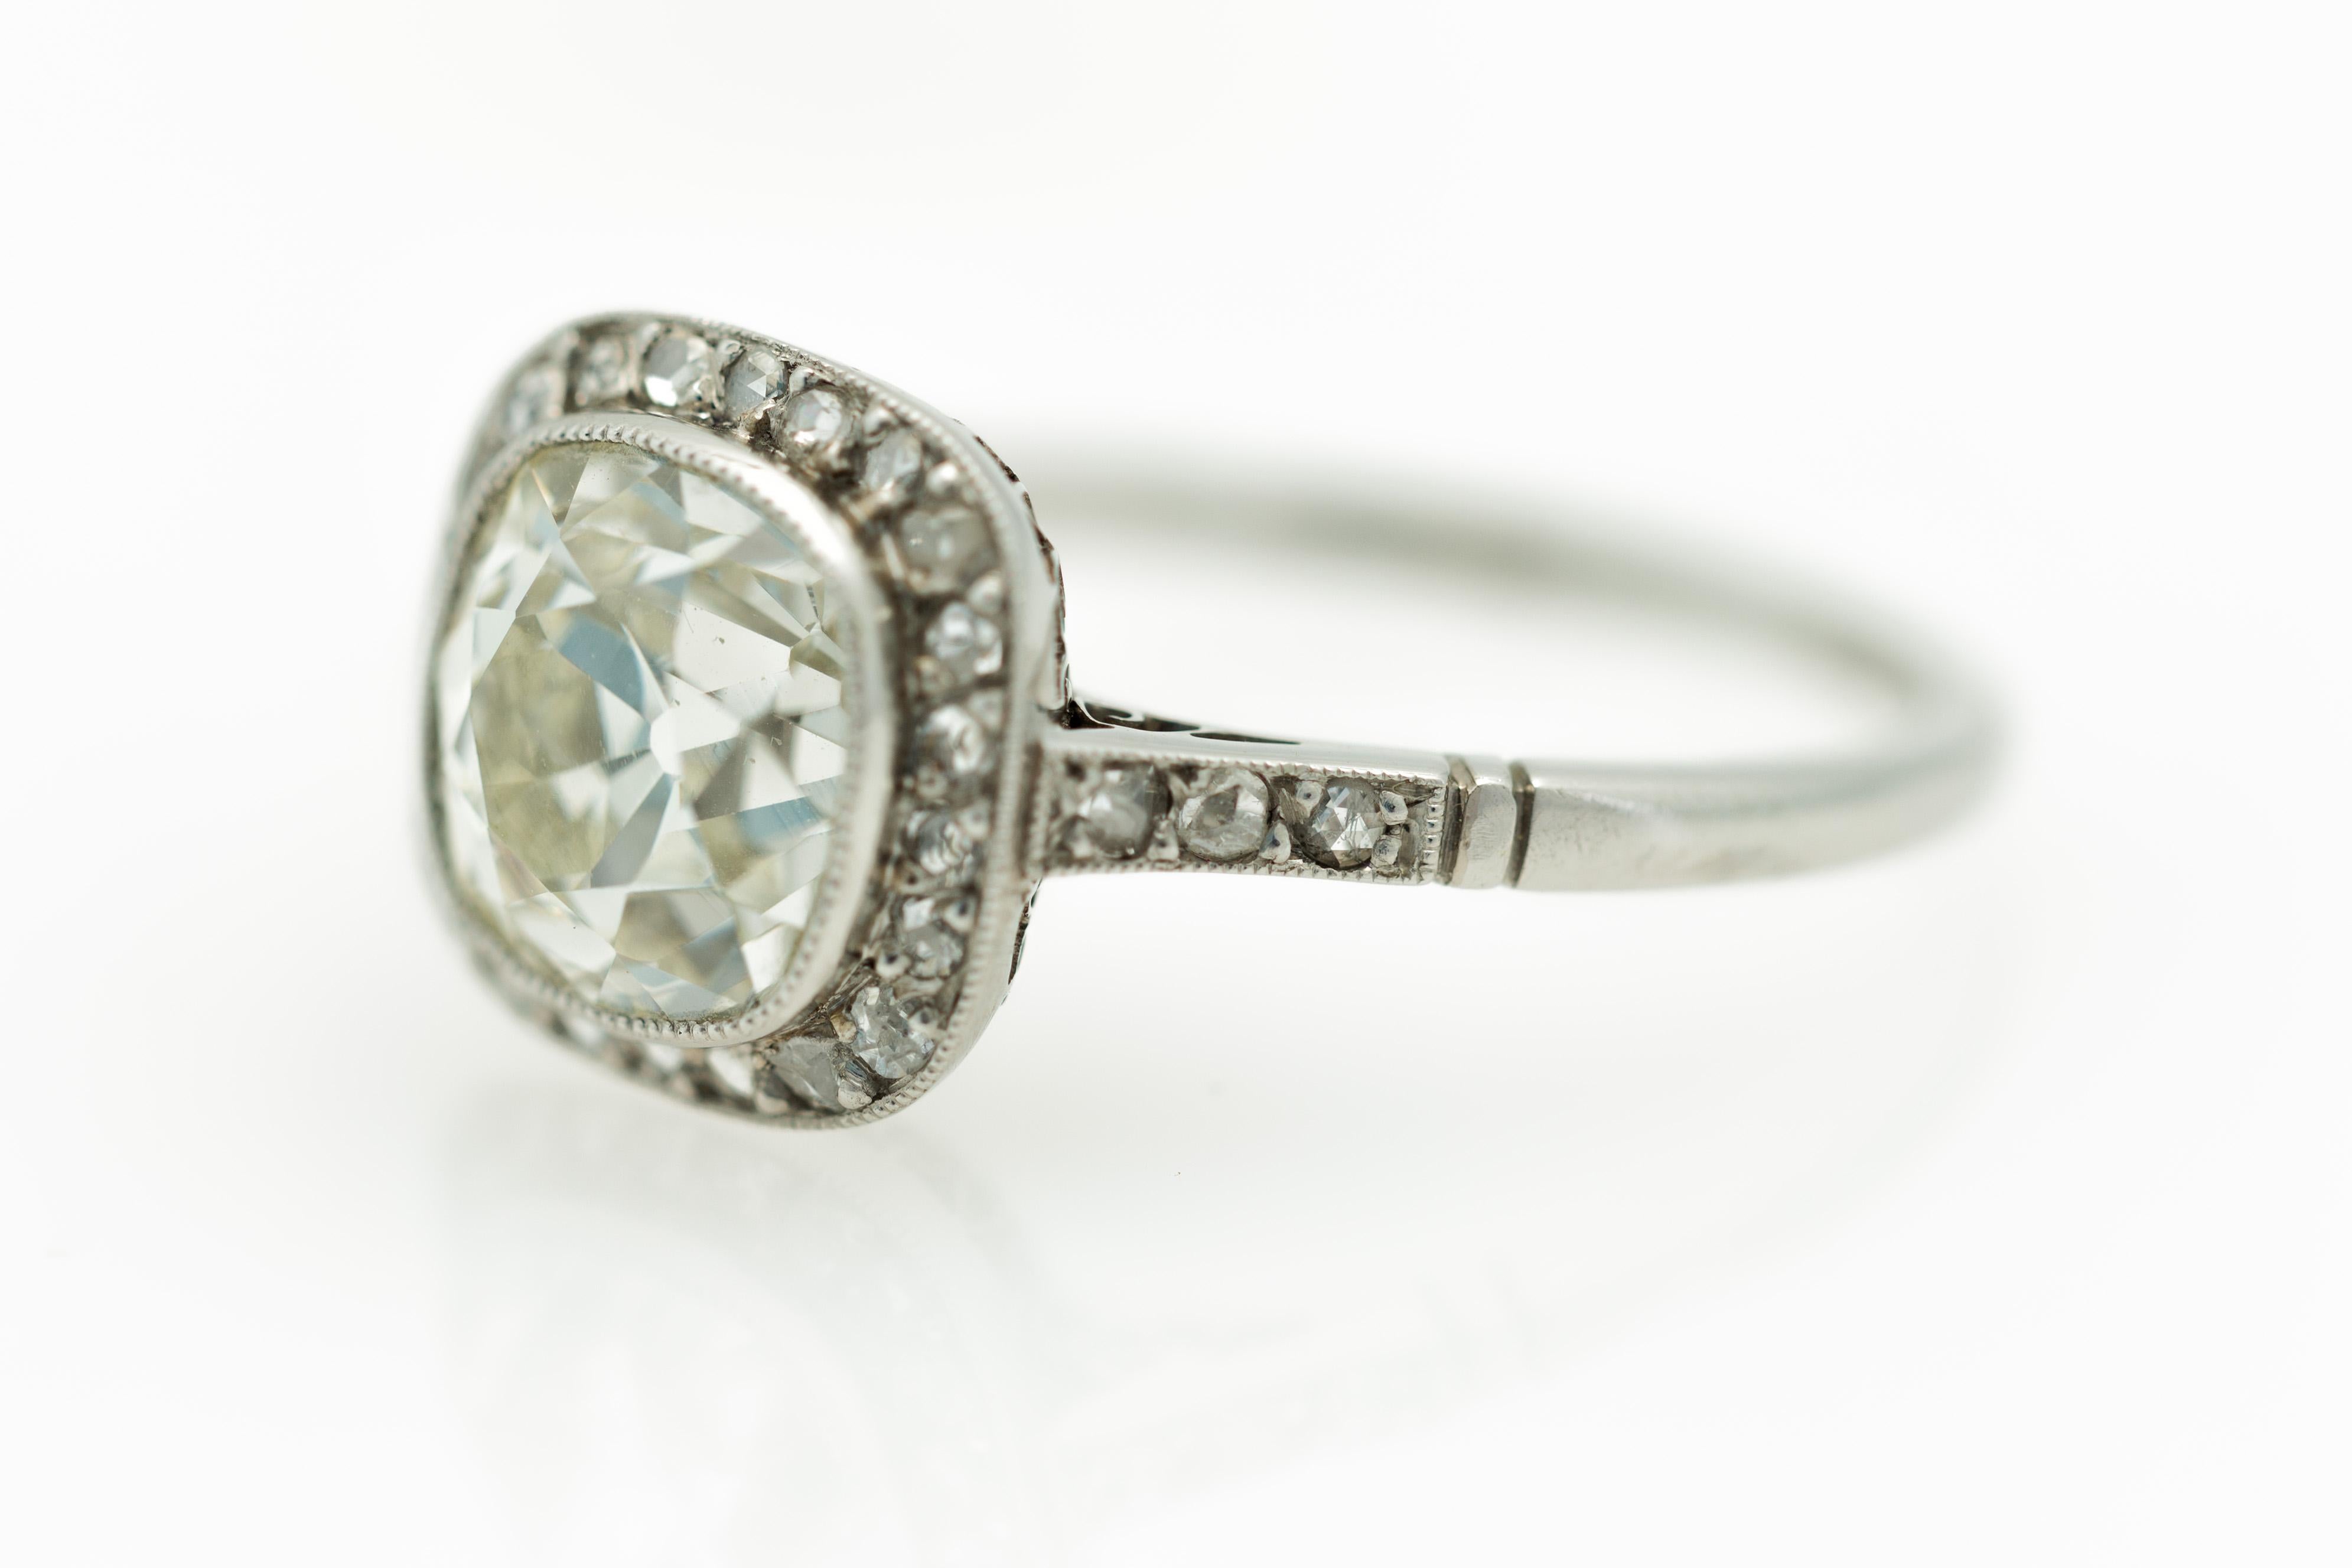 Italian 1950s Art Deco Revival 2.64 Carat Cushion Cut Diamond Ring in Platinum 9